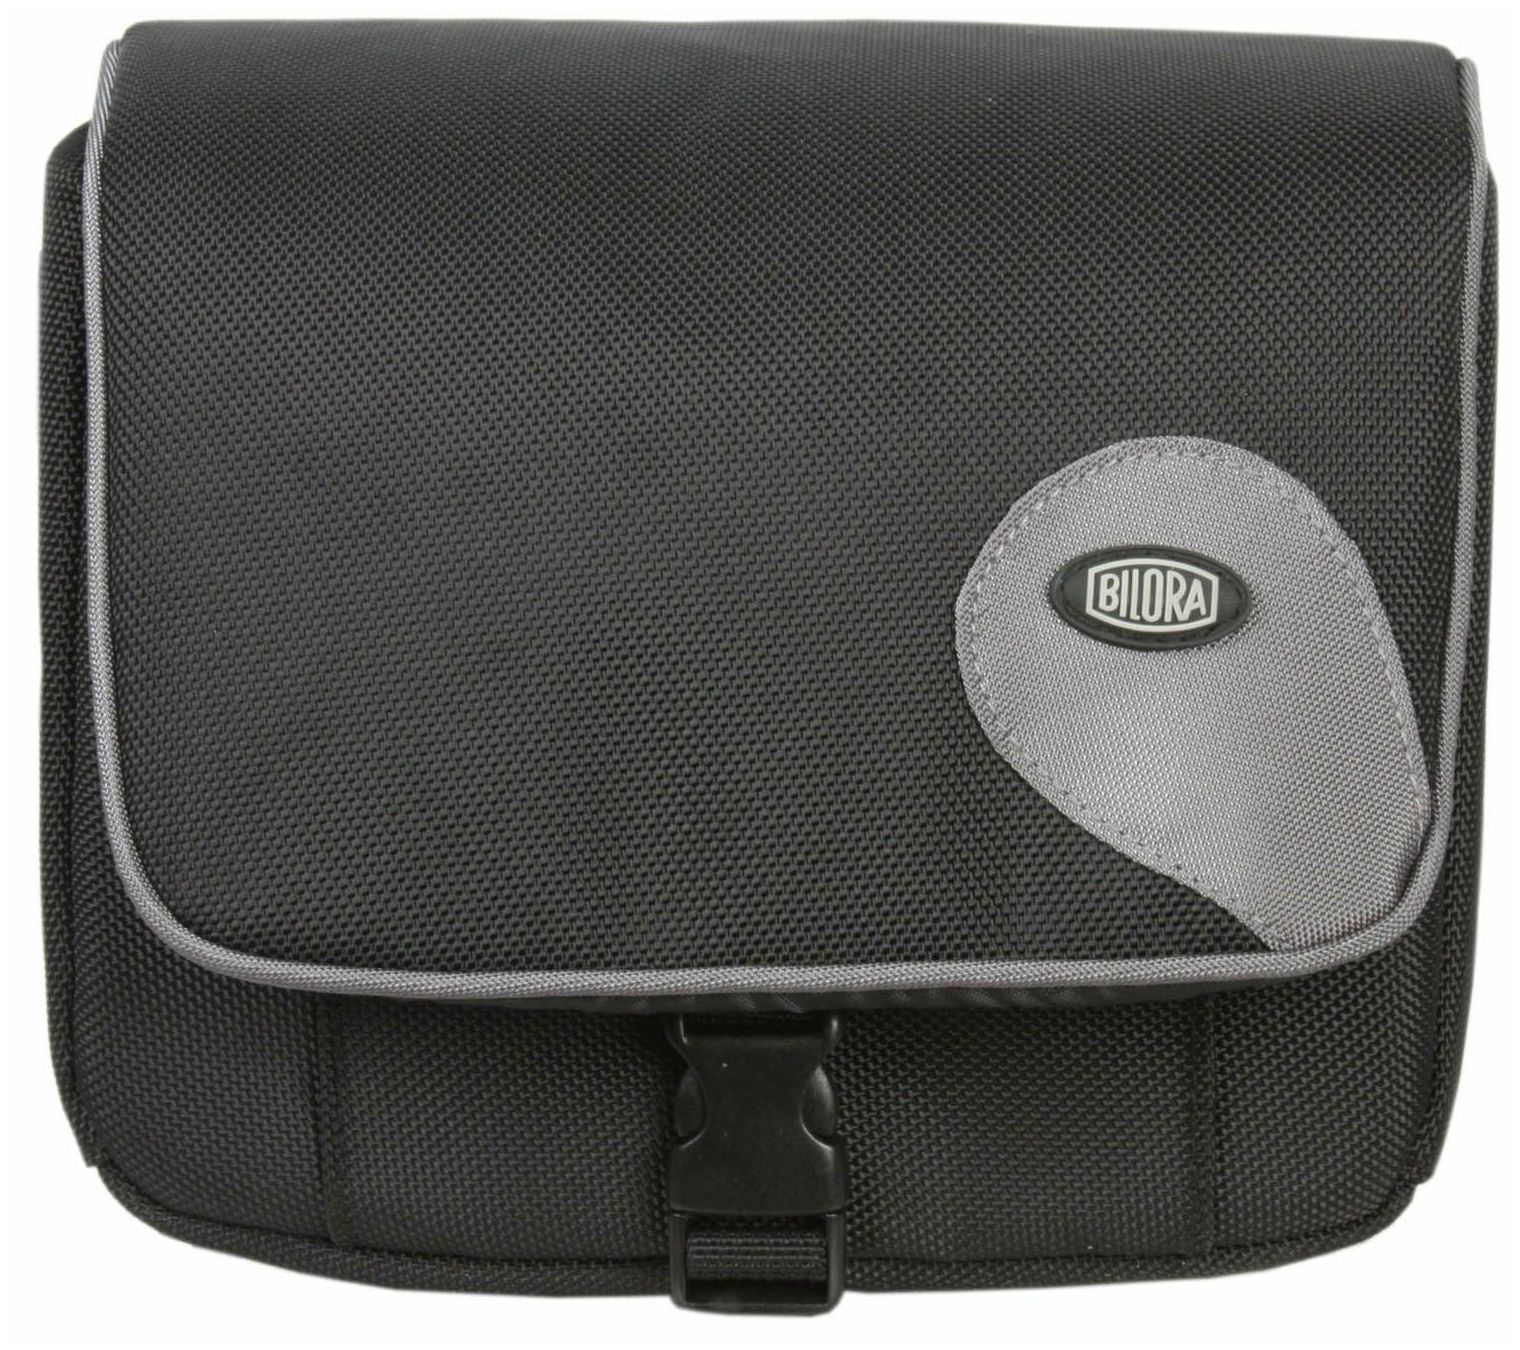 Bilora Compact Promo Bag (286-90) torba za DSLR, mirrorless ili kompaktni fotoaparat